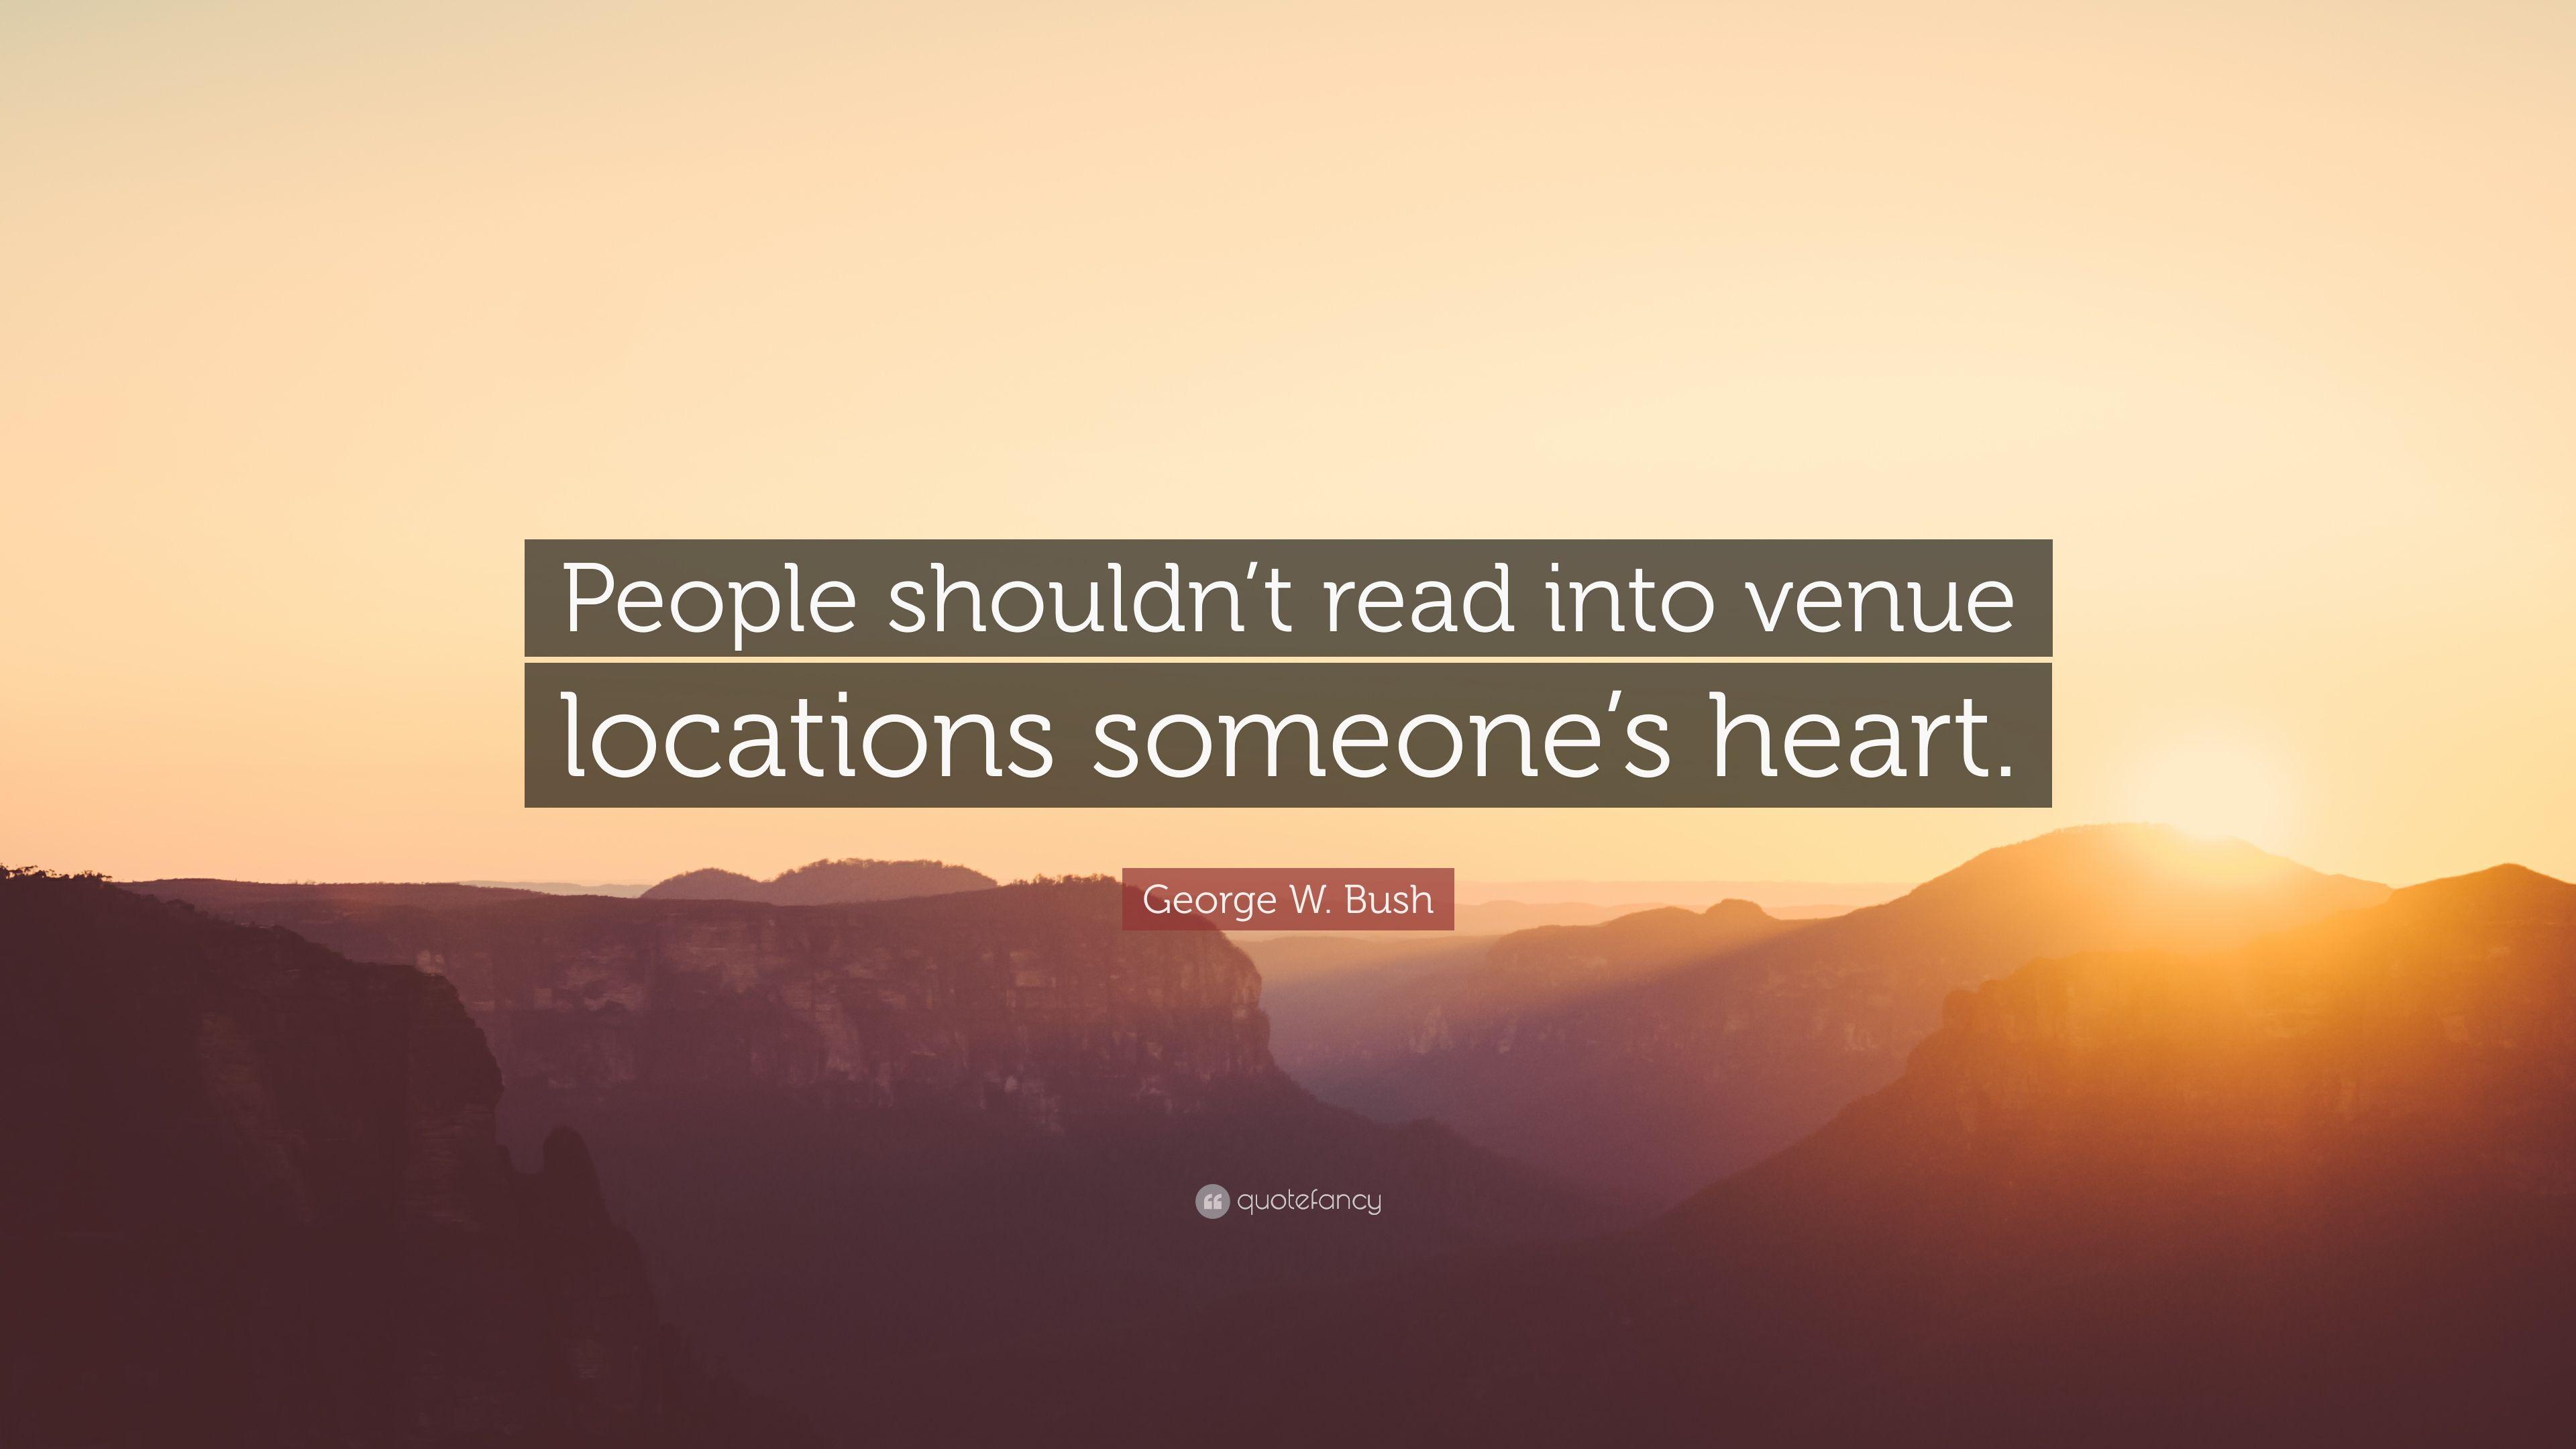 George W. Bush Quote: “People shouldn't read into venue locations